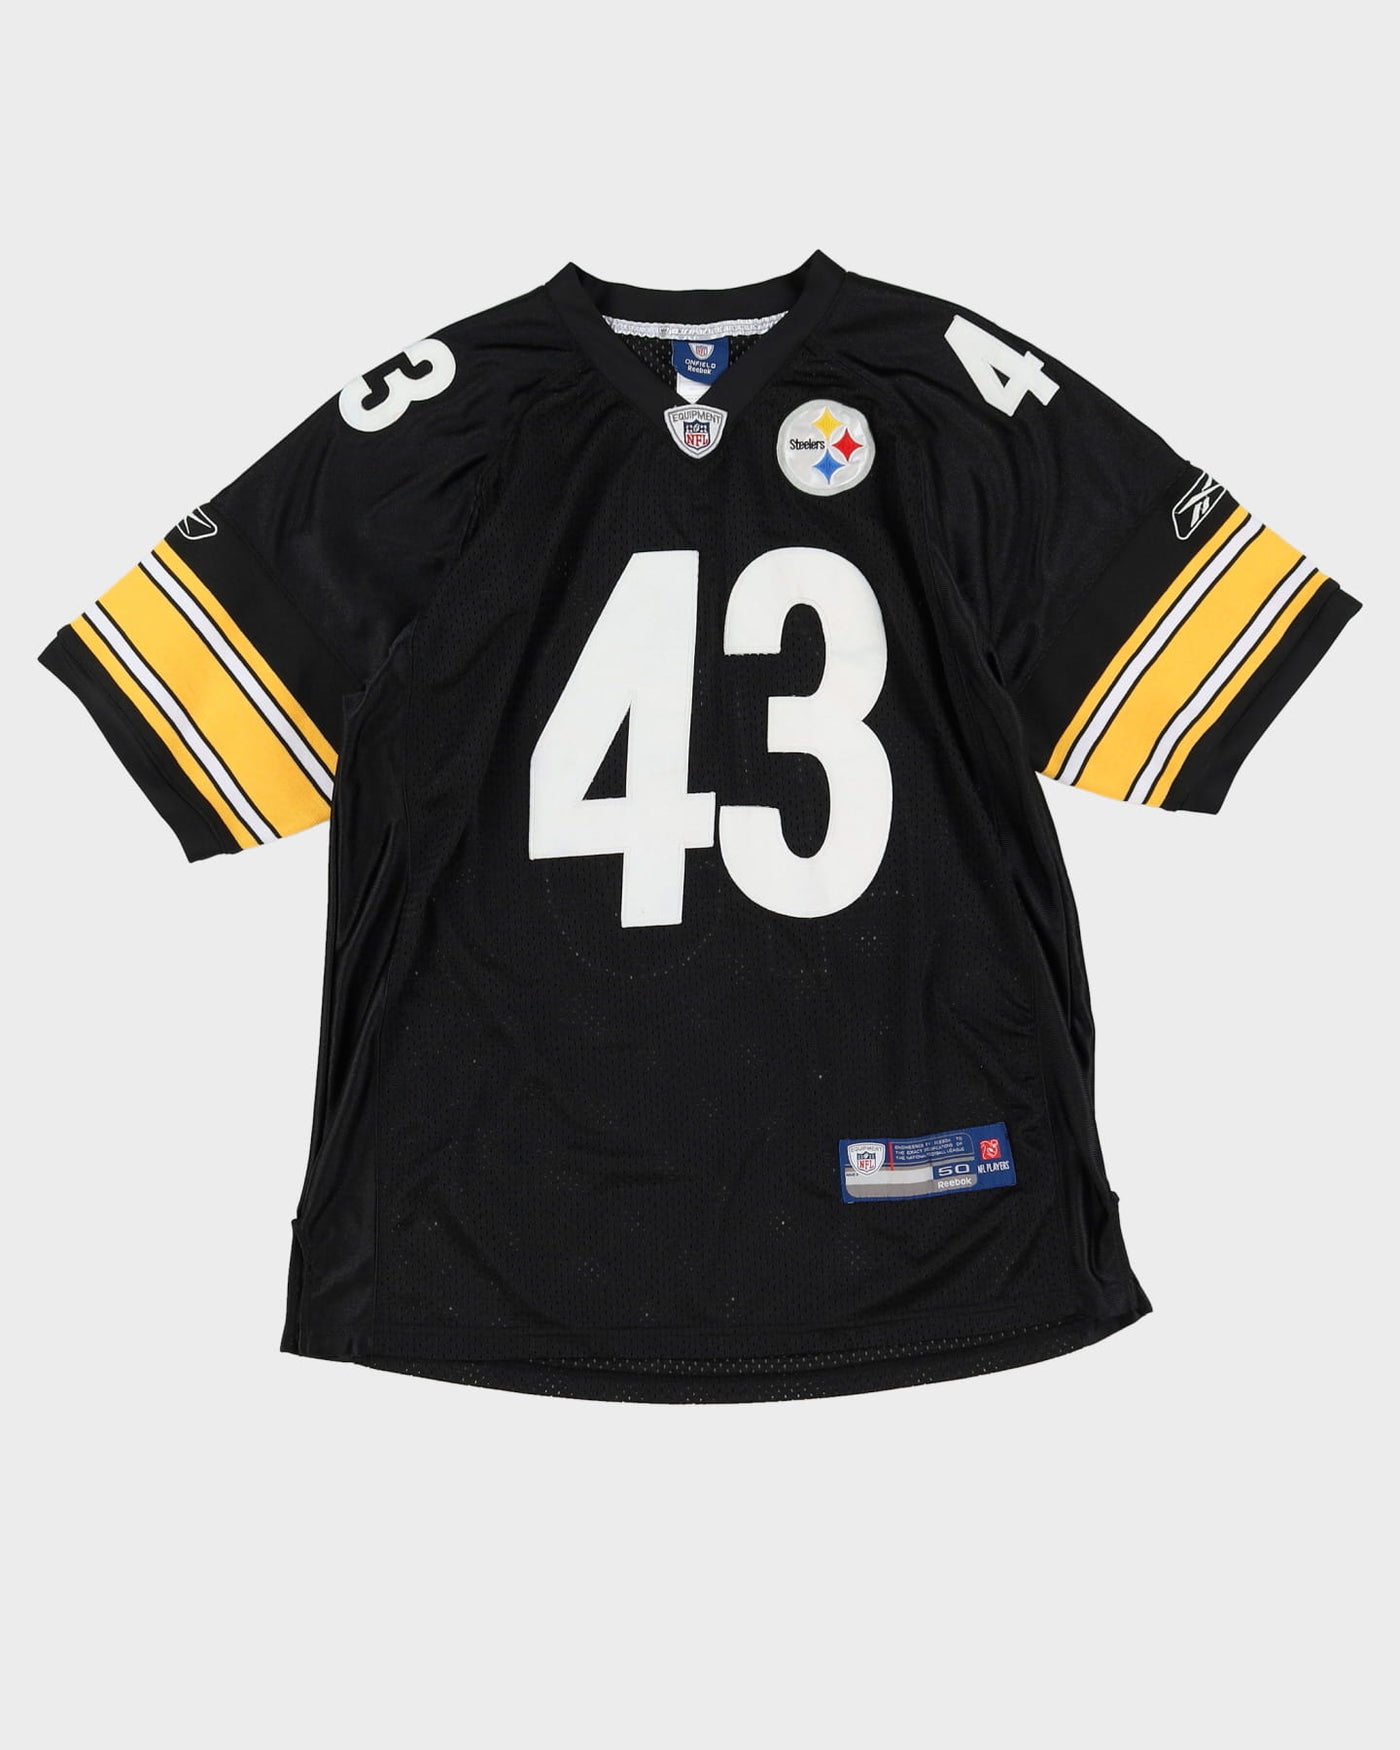 00s Troy Polamalu #43 Pittsburgh Steelers Black / Yellow NFL Jersey - L